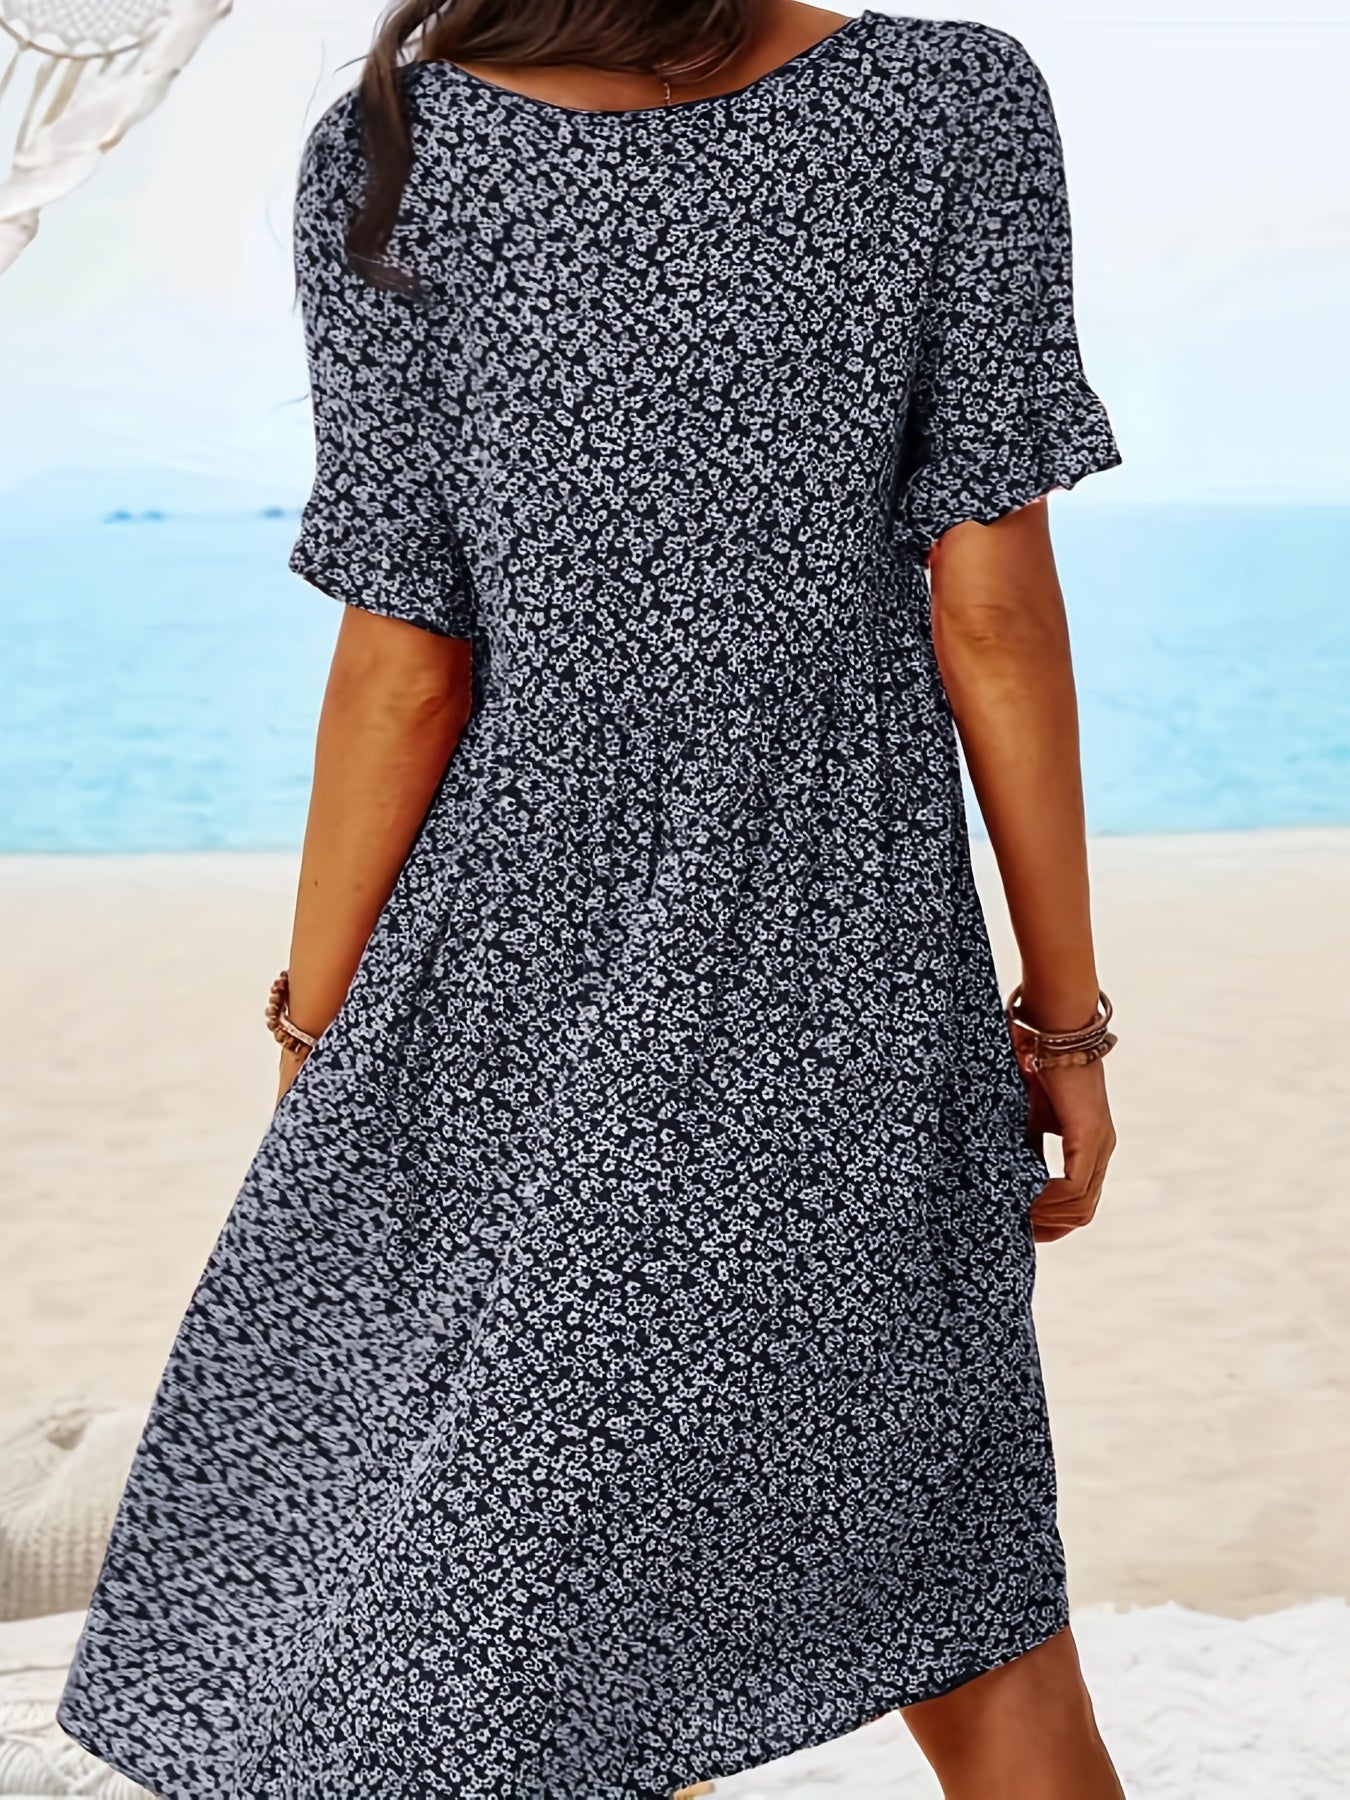 「lovevop」Ditsy Floral Print Boho Dress, Vacation Scoop Neck Short Sleeve Beach Summer Dress, Women's Clothing